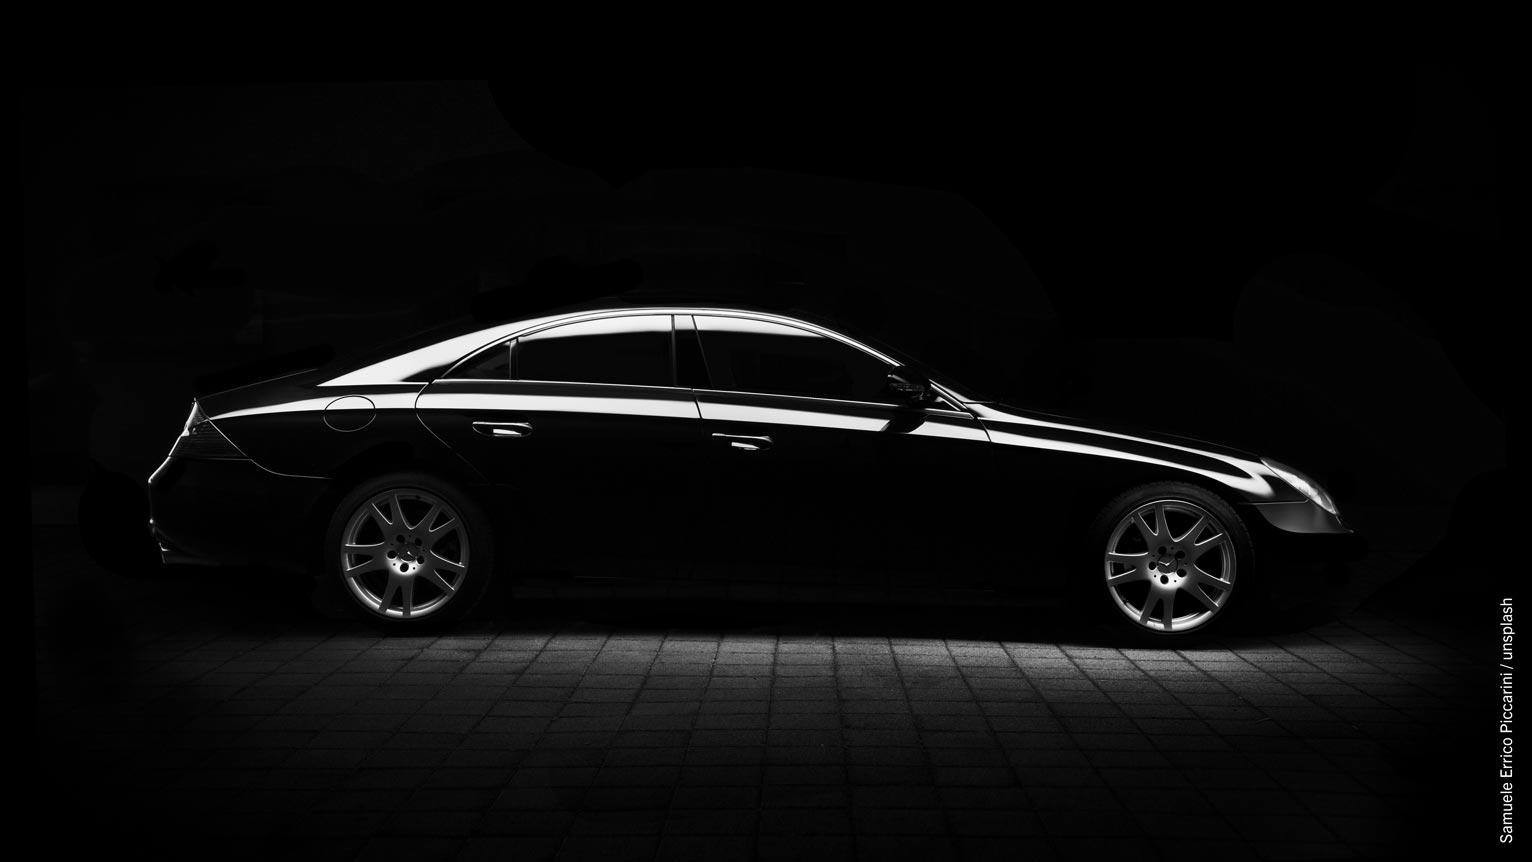 Mercedes minimal silhouette by Samuele Errico Piccarini via Unsplash